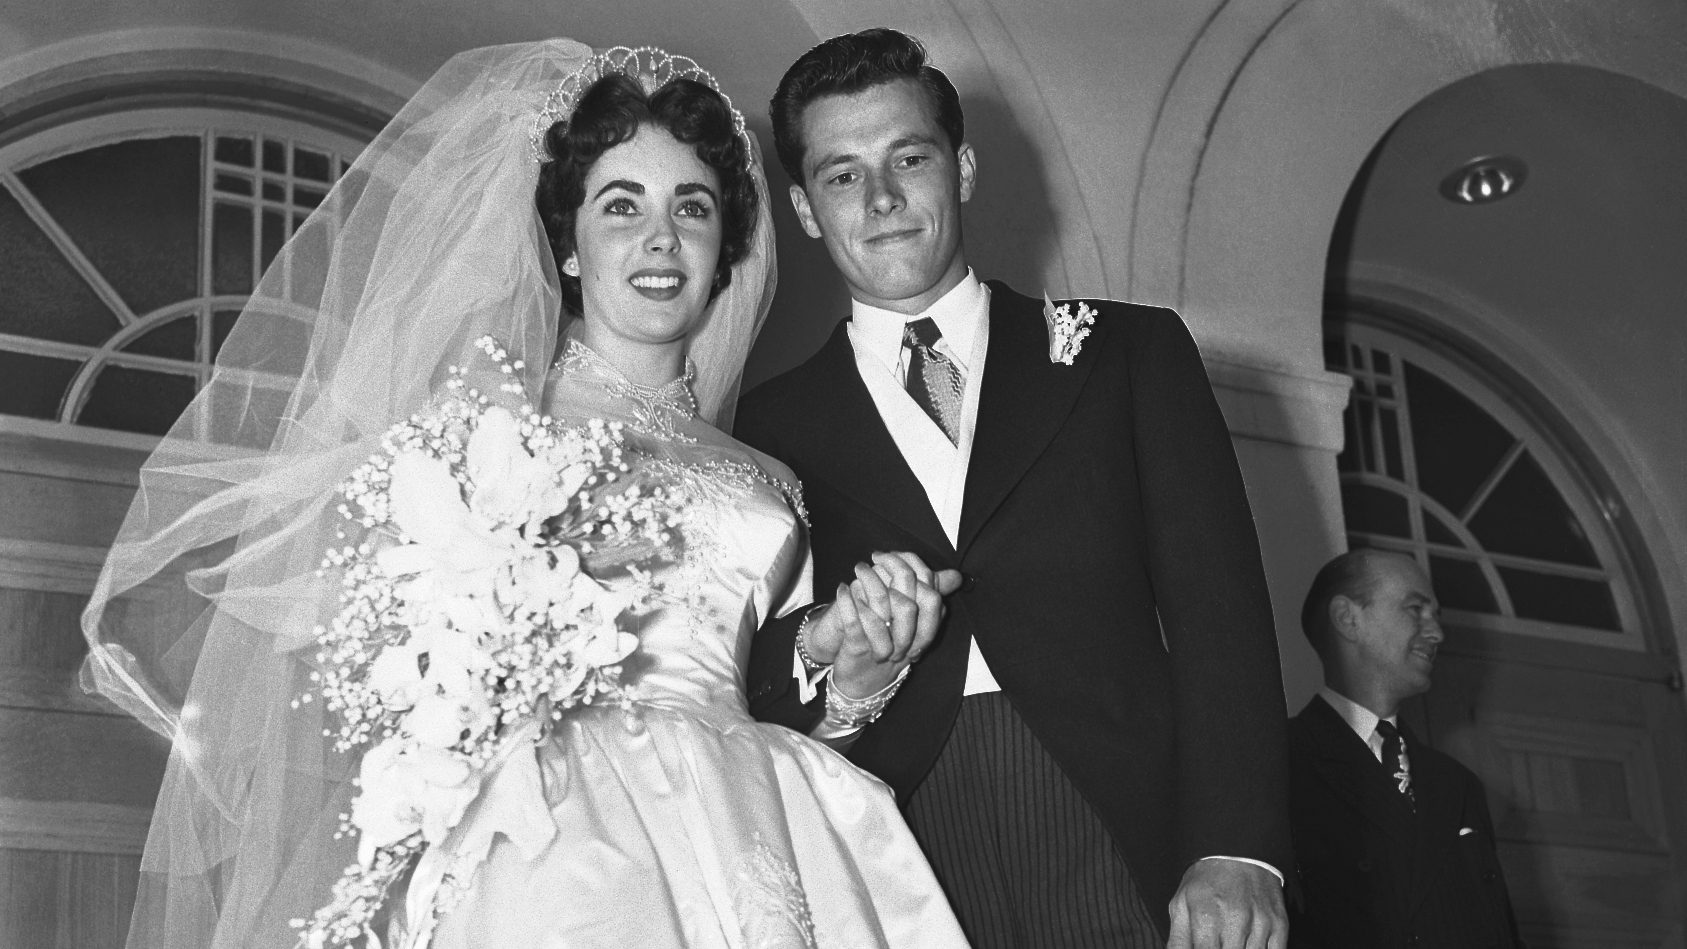 Elizabeth Taylor's husbands and Conrad "Nicky" Hilton, 1950 